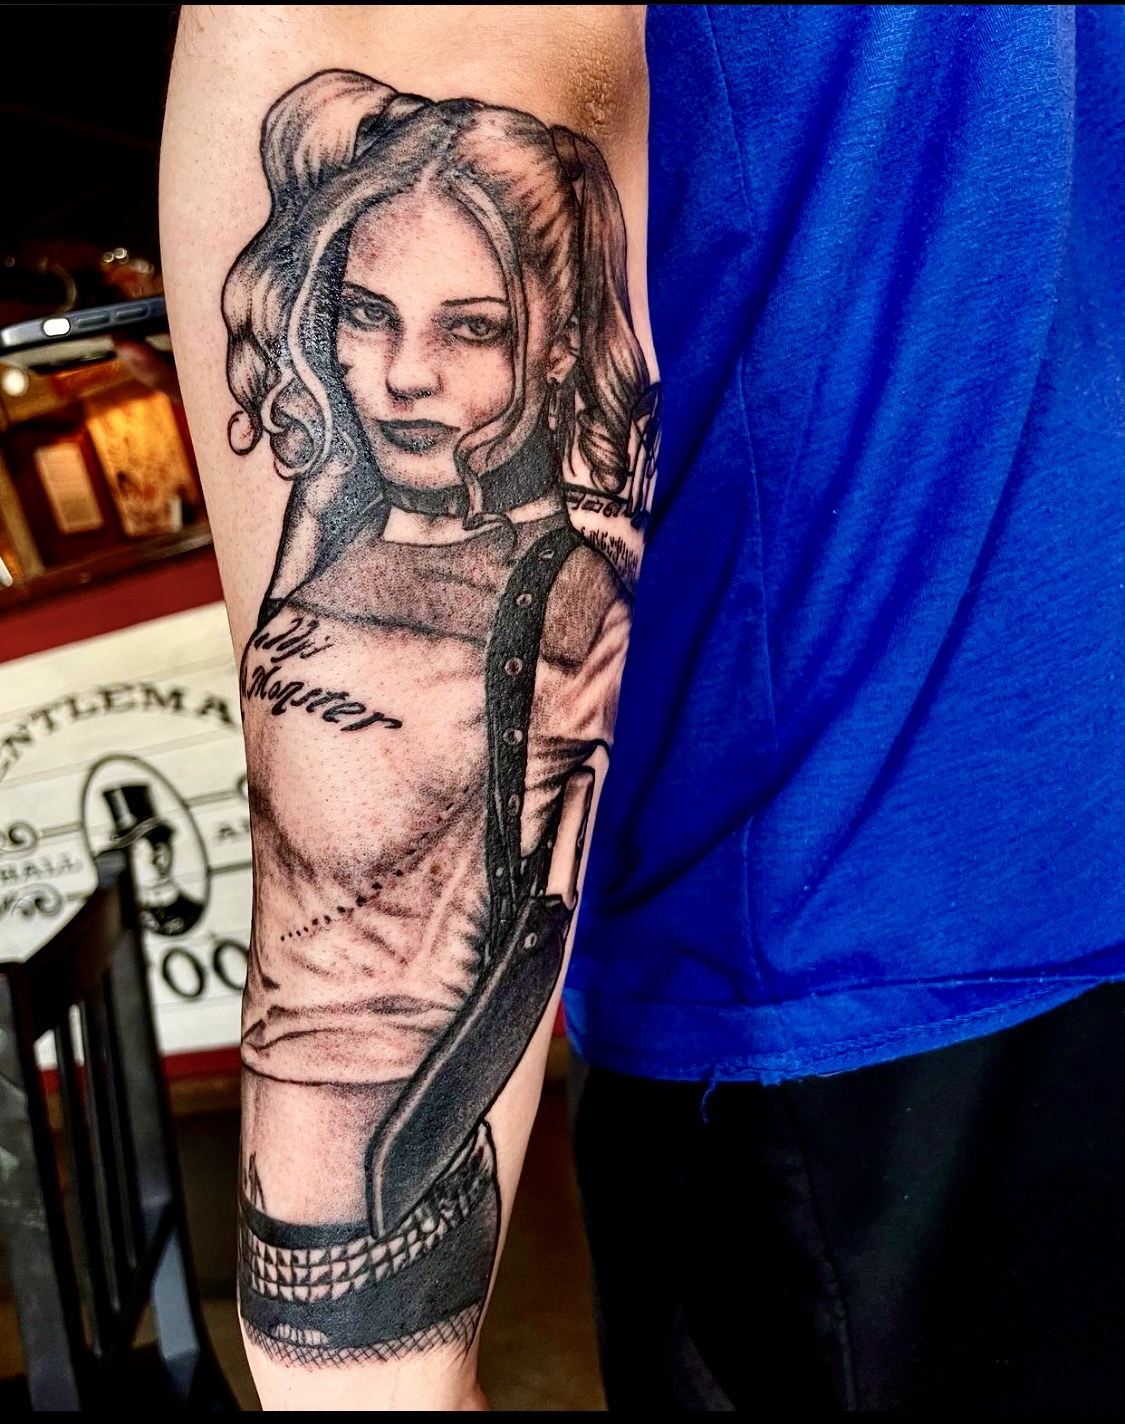 Tattoo of a woman from top tattoo artist in Dallas TX